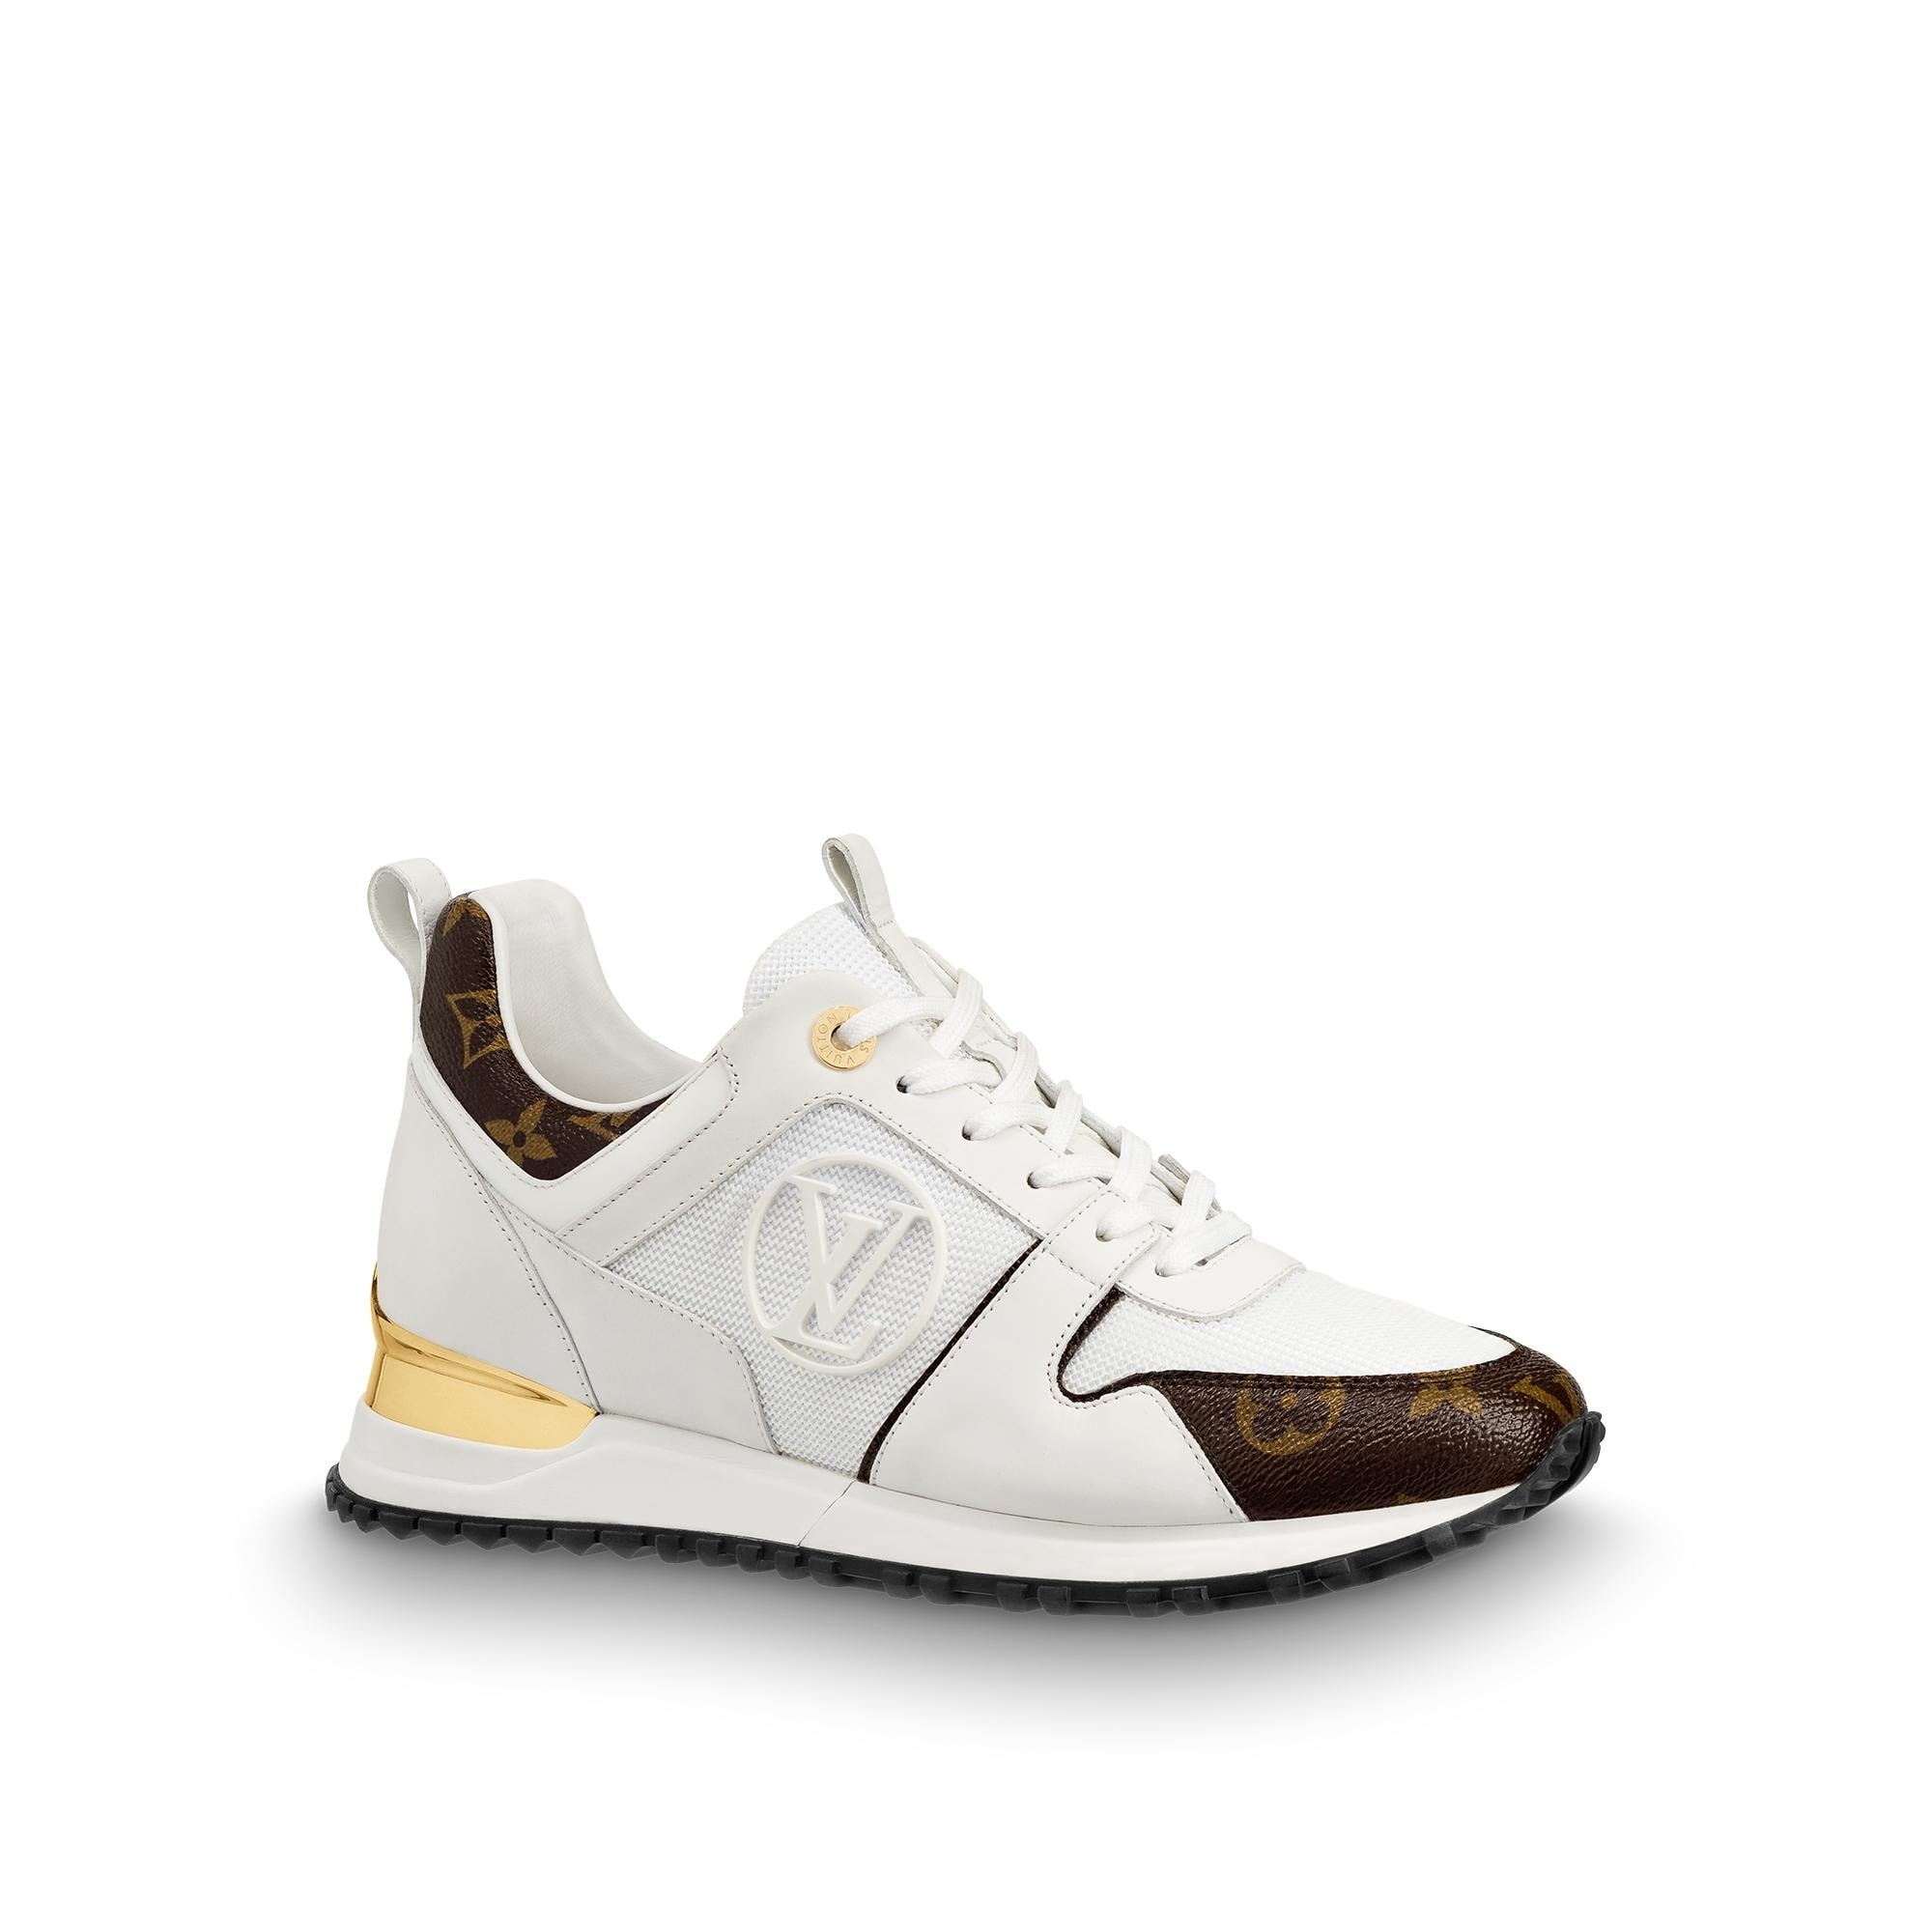 Louis Vuitton Run 55 Sneaker Gold. Size 38.5